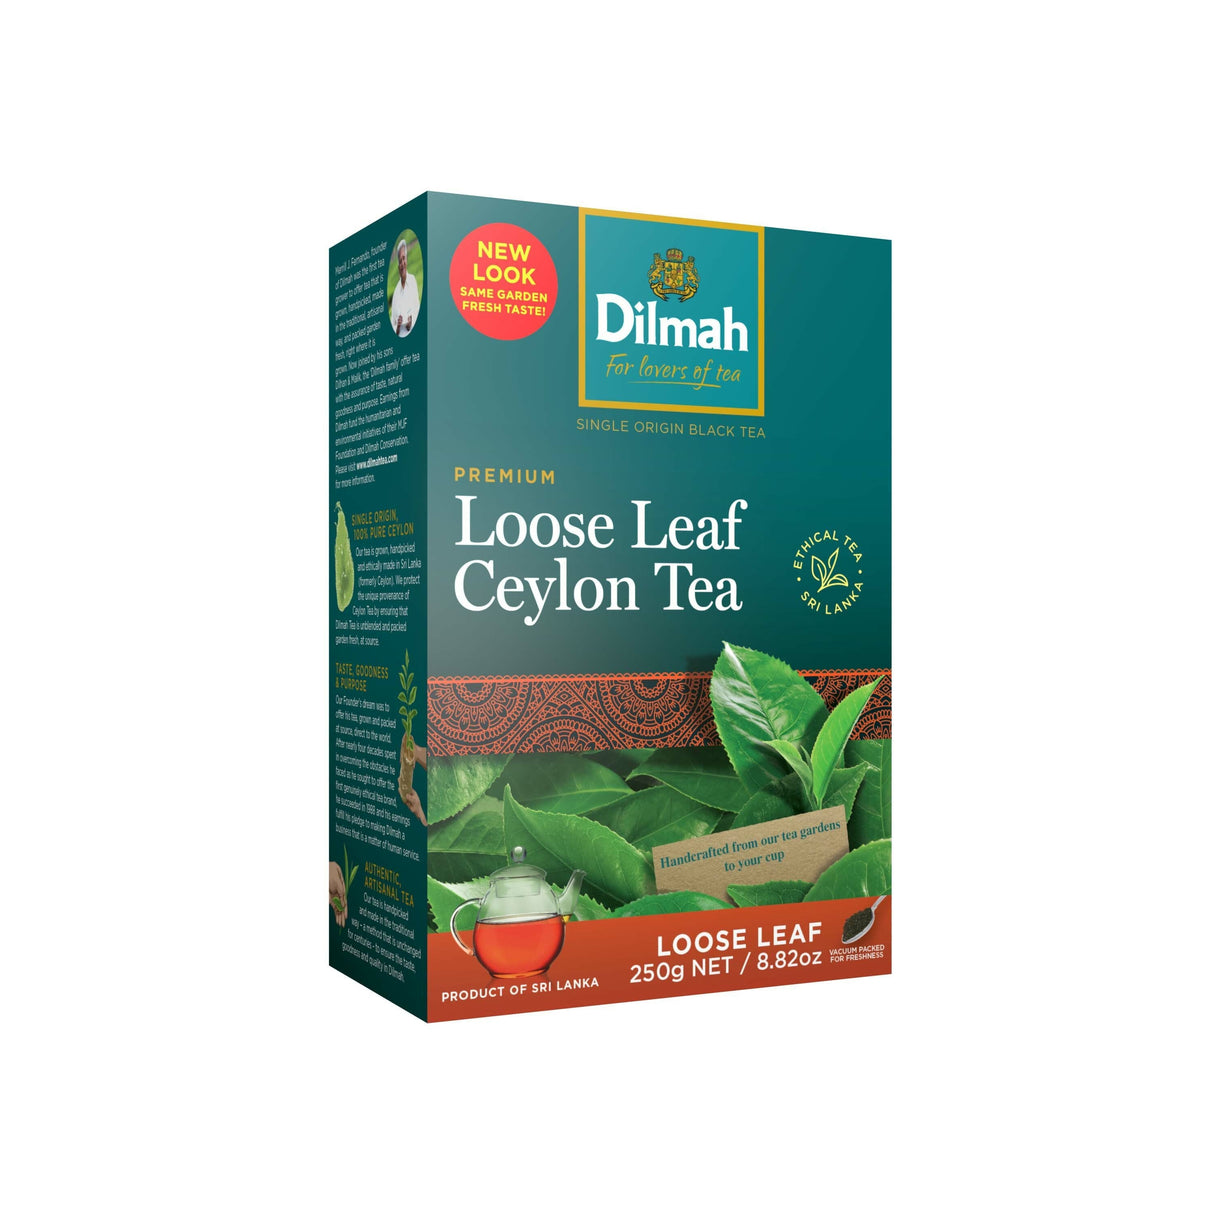 Dilmah Premium Loose Leaf Tea 250g